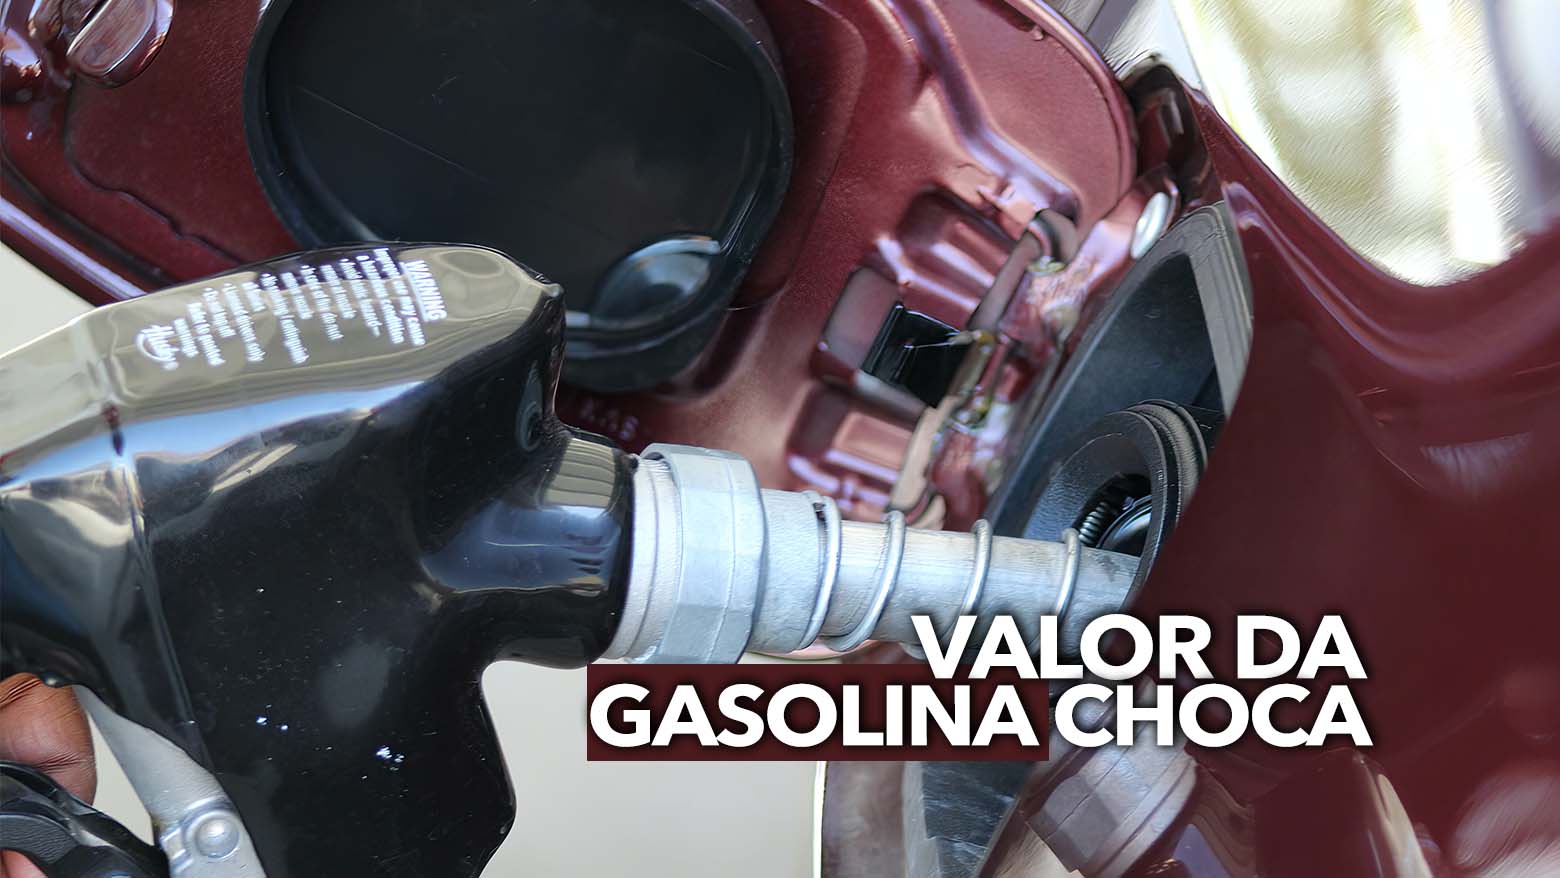 New gasoline price shocks Brazilians;  Check the fuel value in the pumps